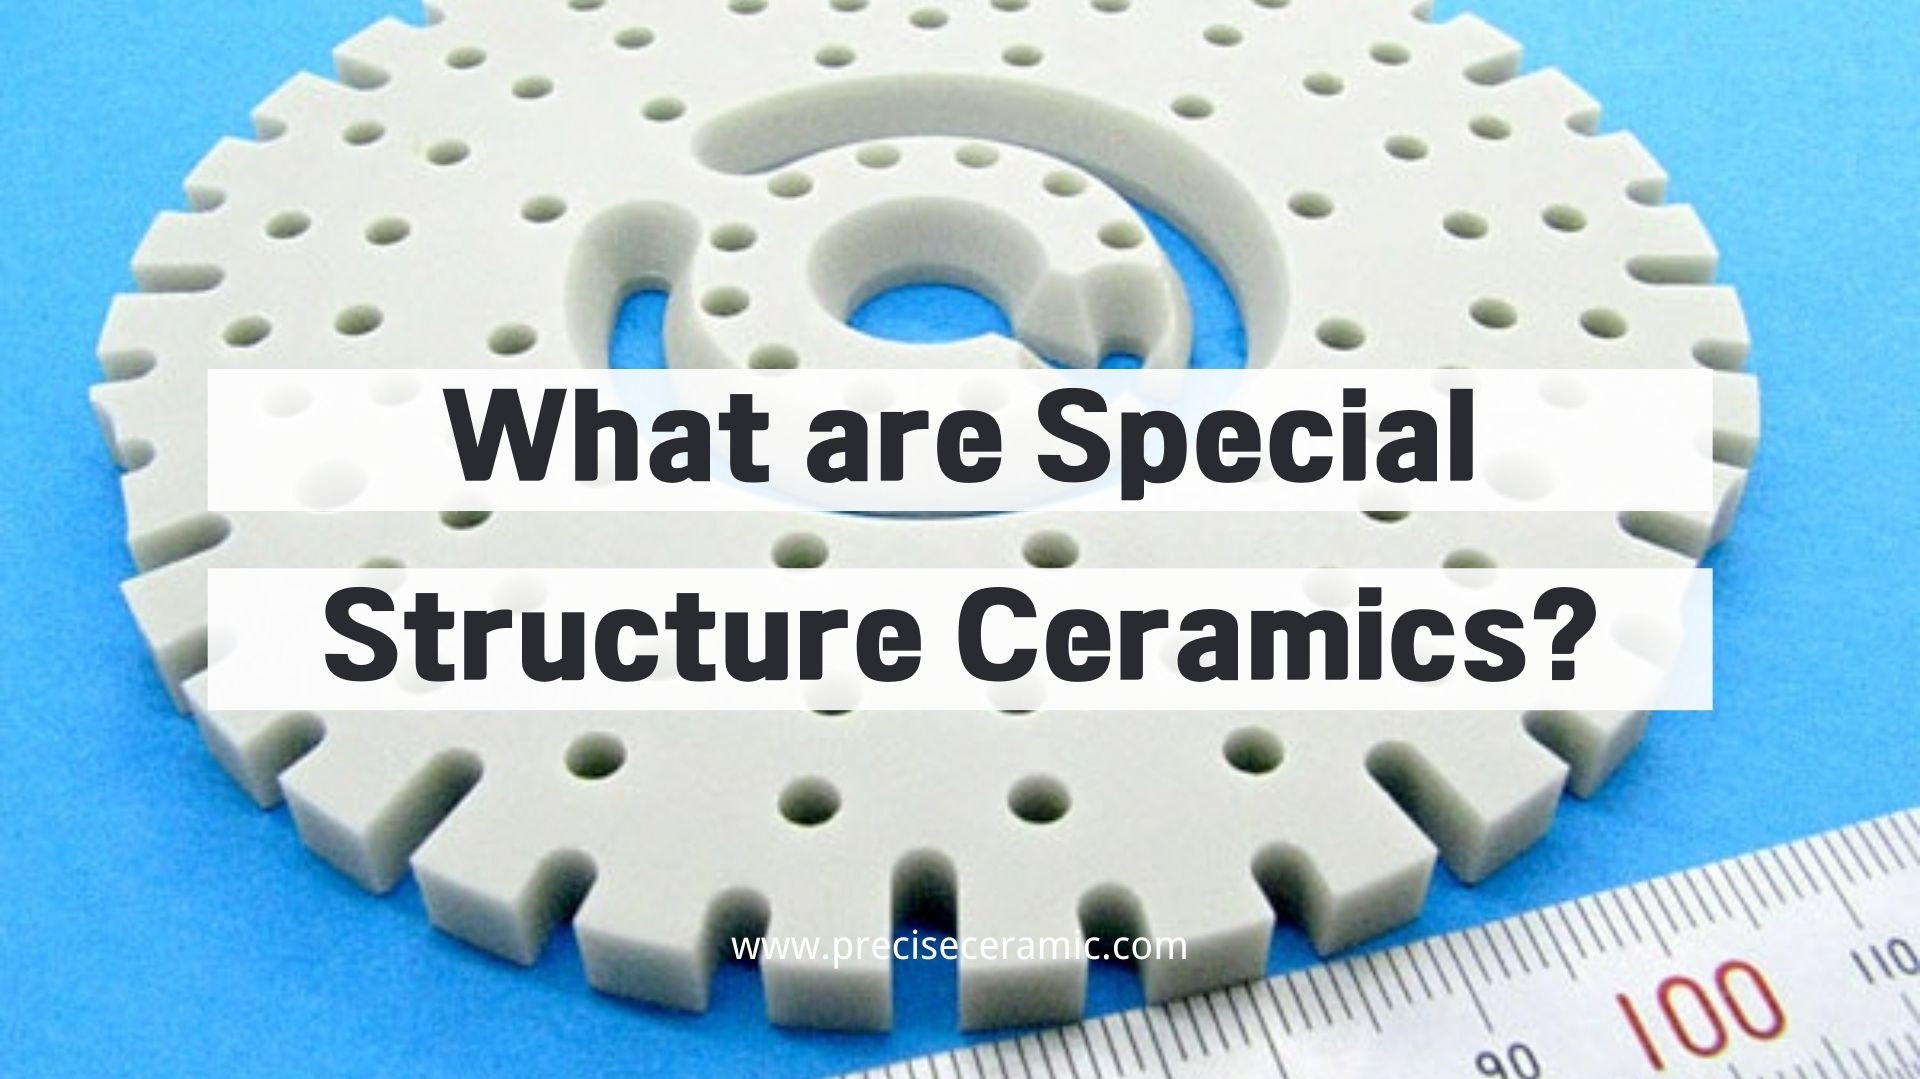 What are Special Structure Ceramics